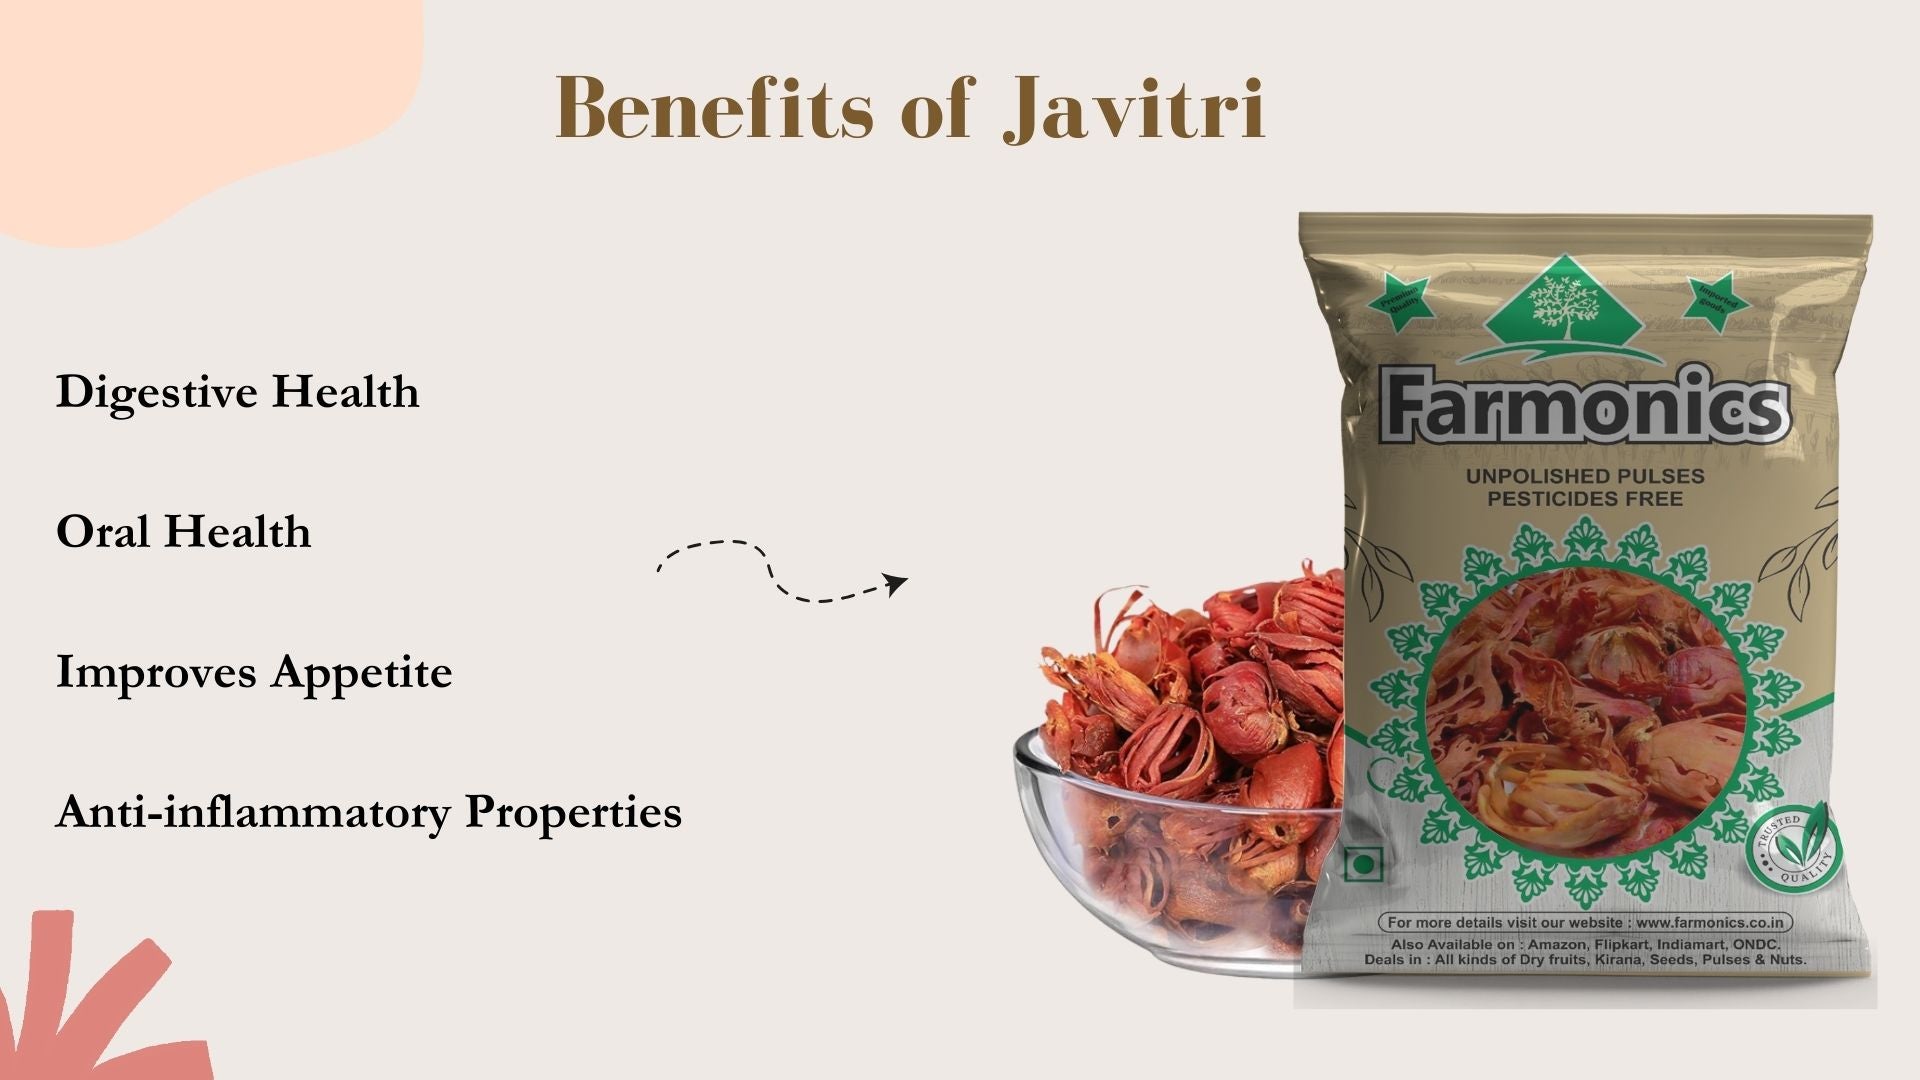 Benefits of best quality Farmonics javitri 